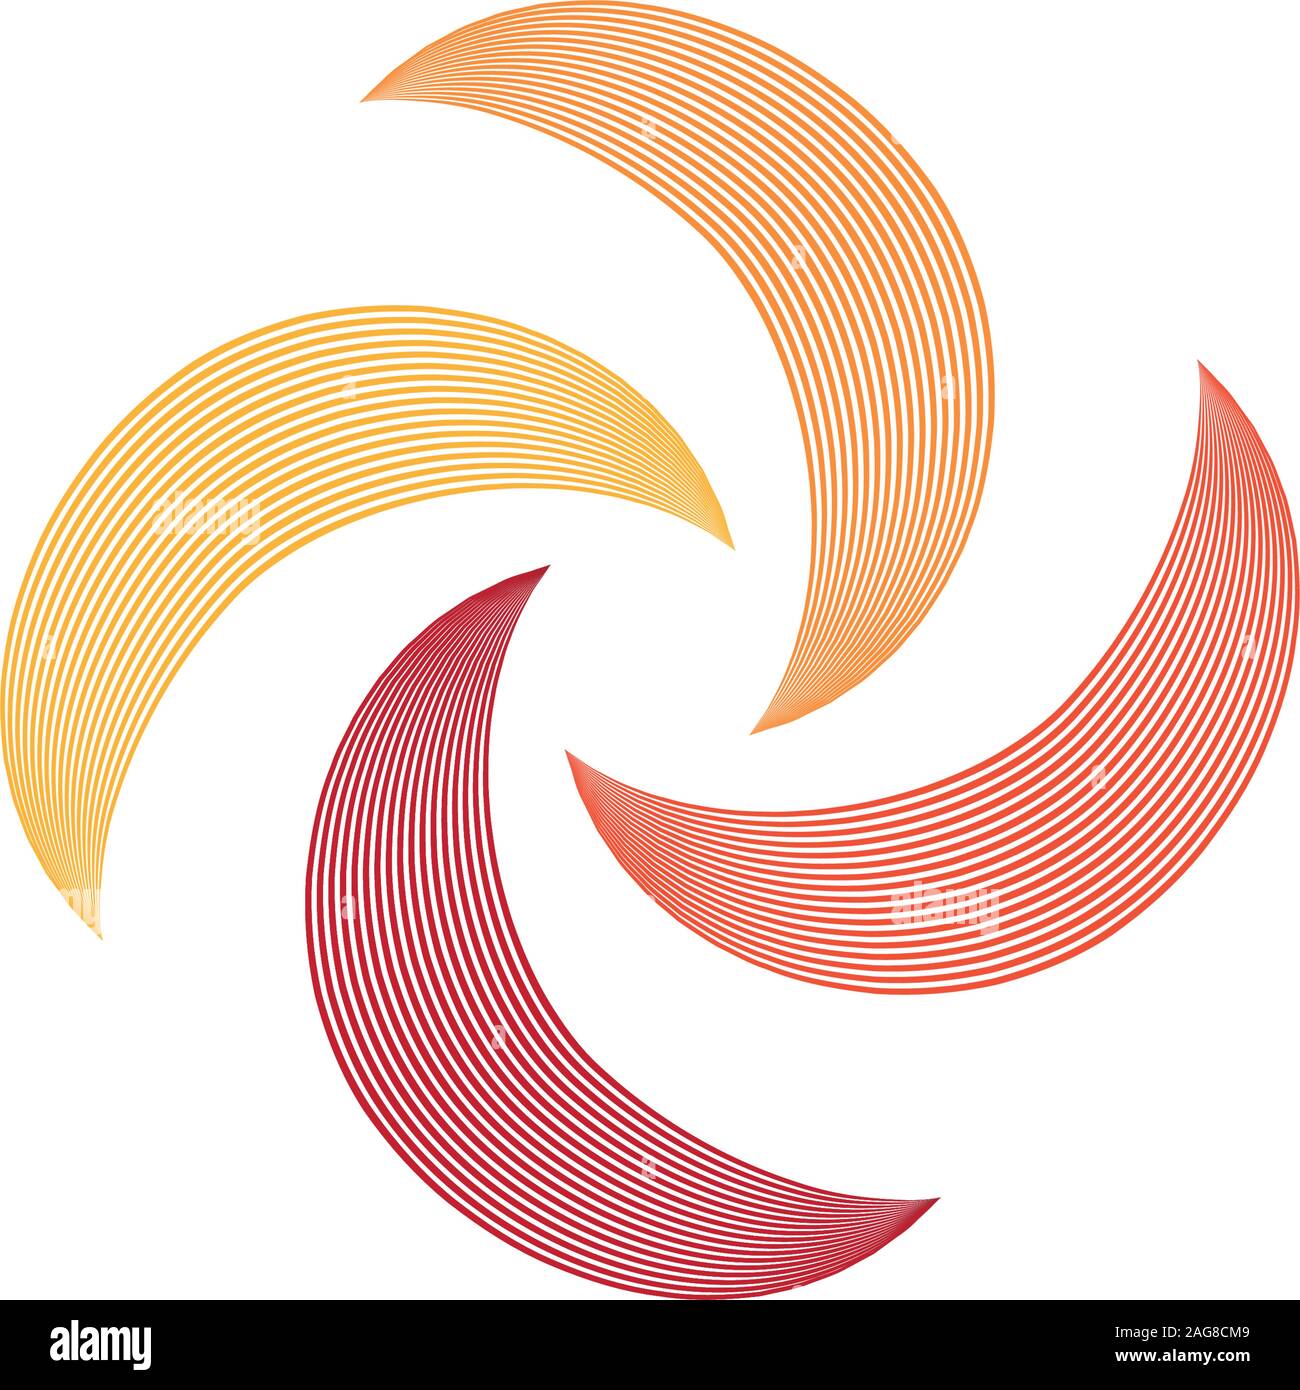 Abstract swirl icon, Hurricane logo, boomerang isolated symbol, vector illustration. Stock Vector